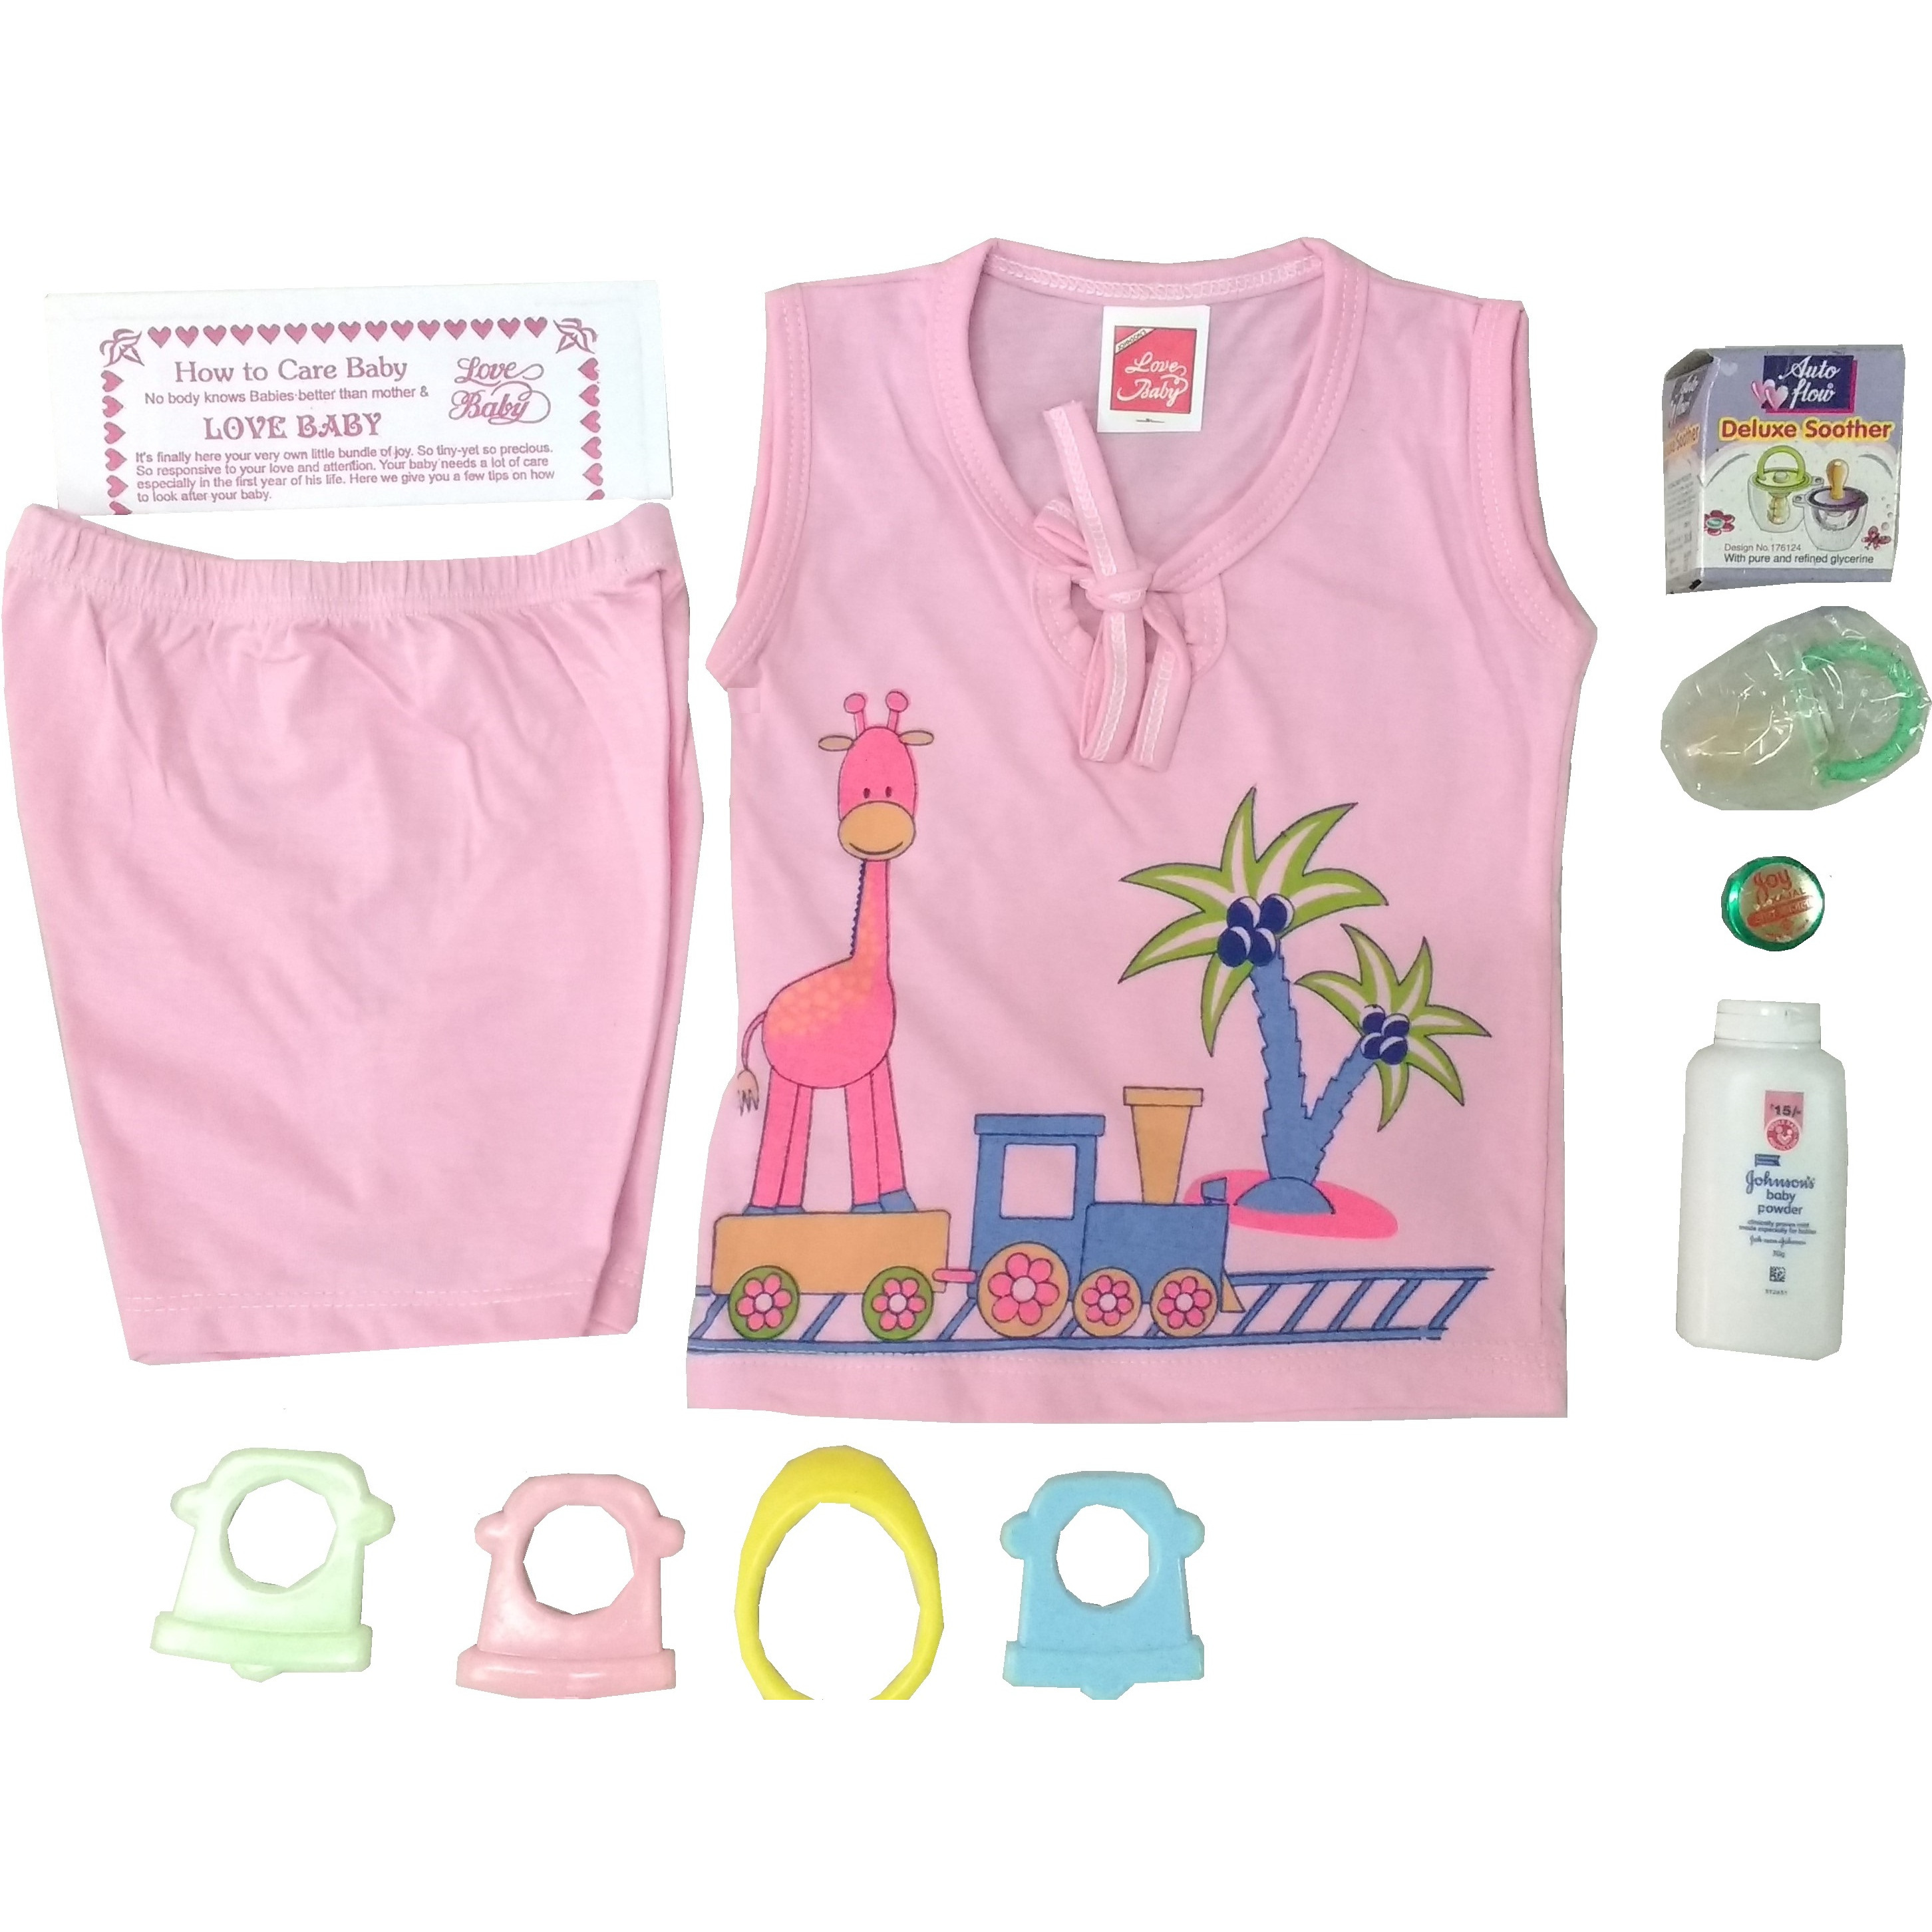 Love Baby Gift Set - Hot shot Pink